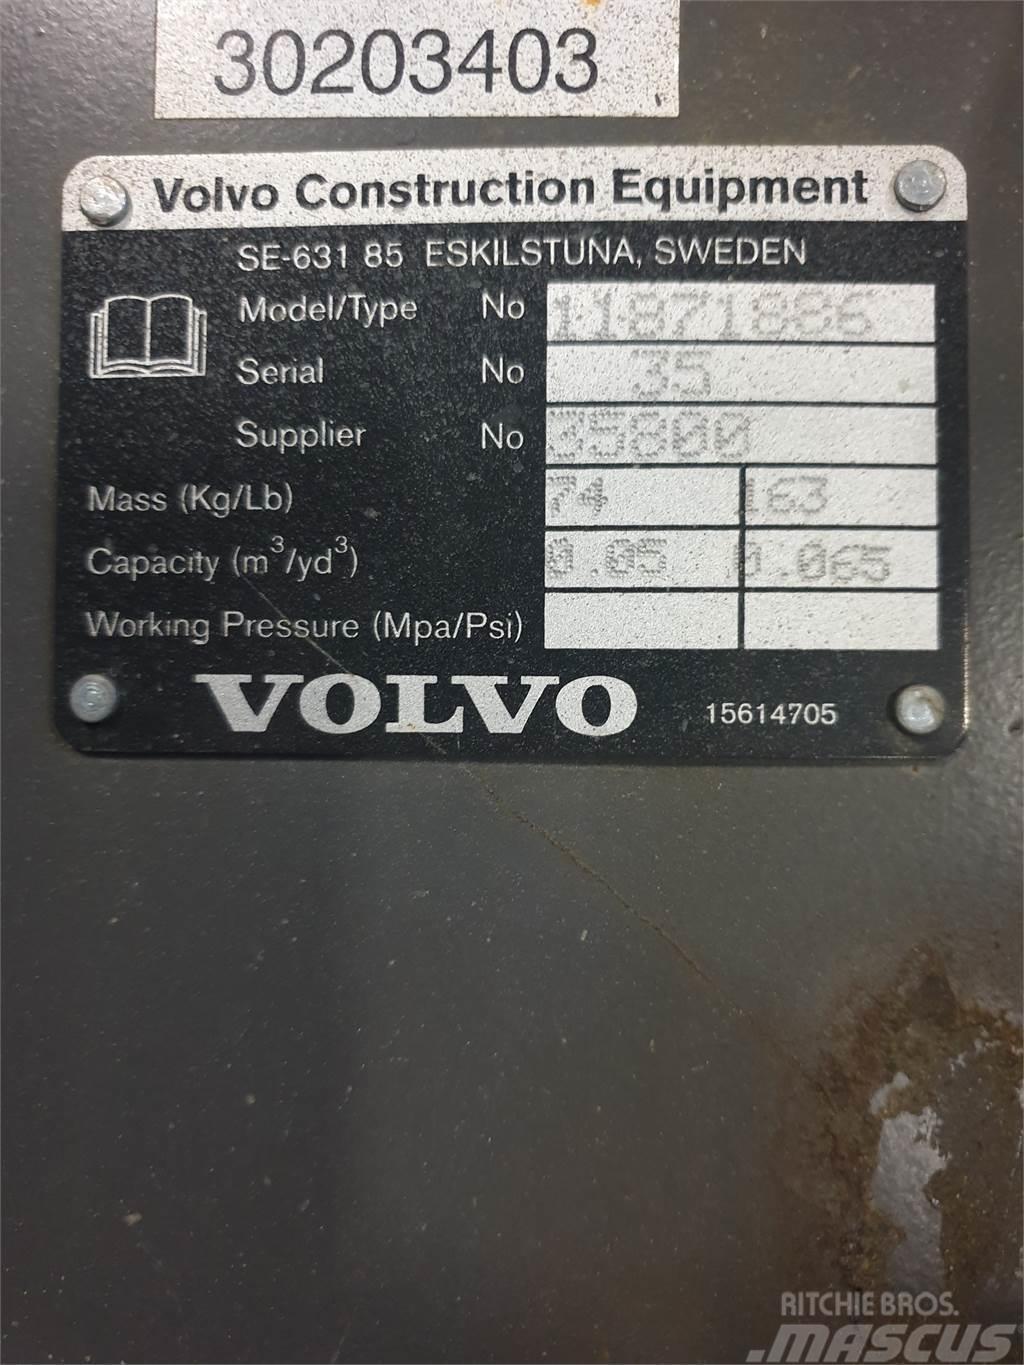 Volvo Kabelskopa S40 300mm Buckets